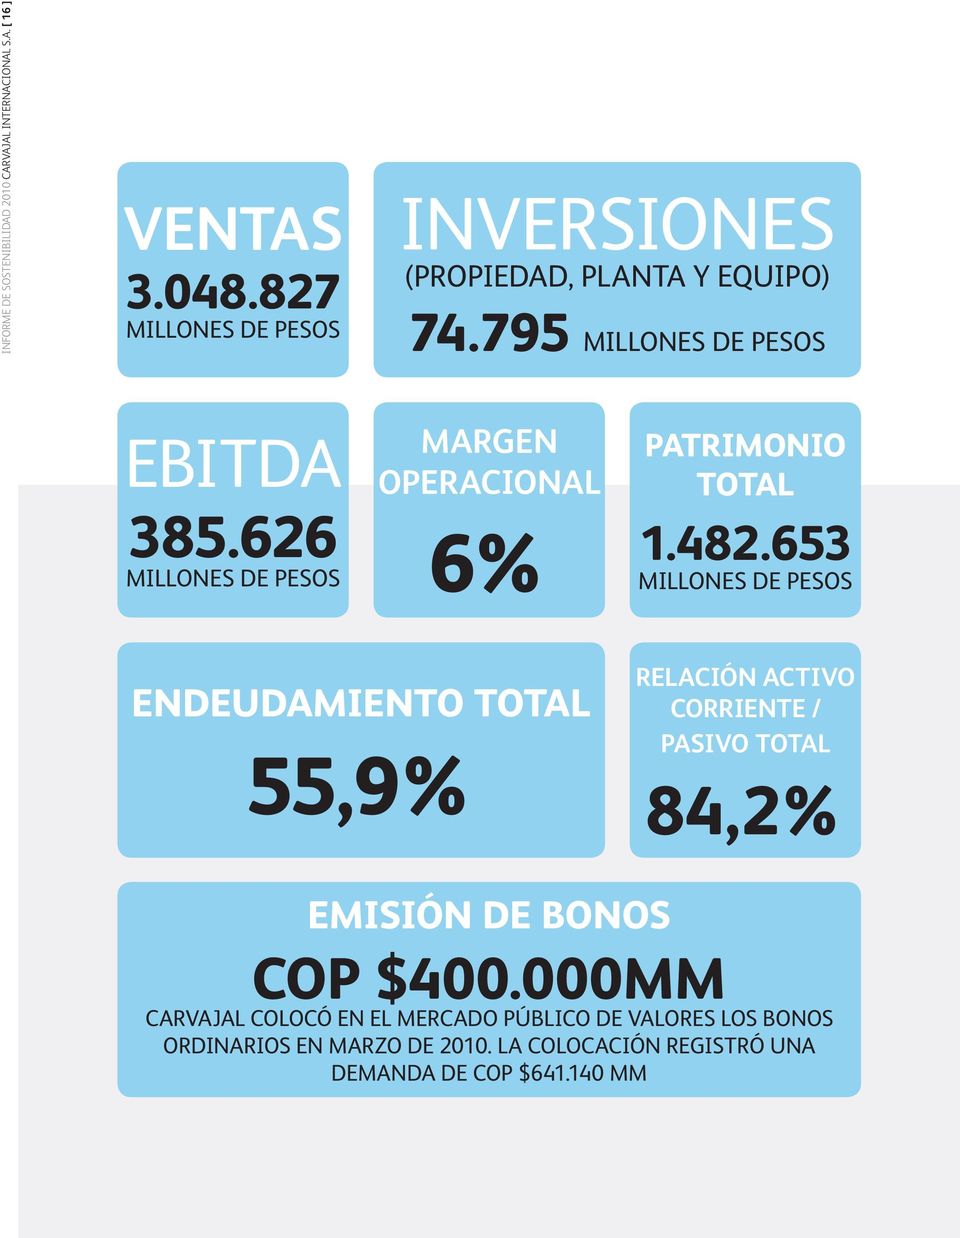 626 millones de pesos Margen Operacional 6% Patrimonio total 1.482.